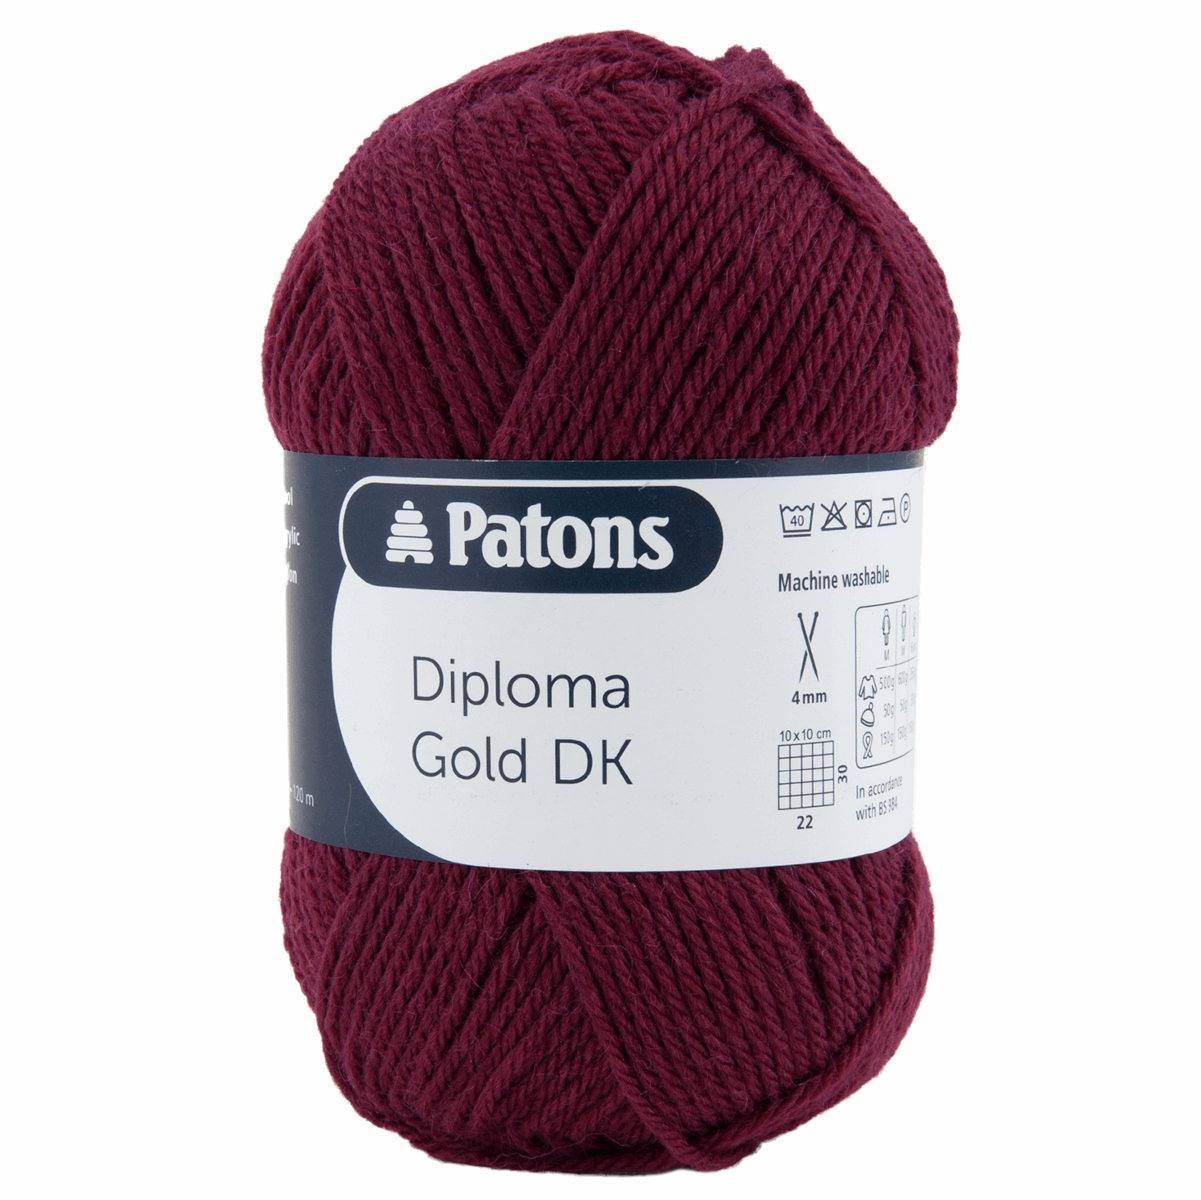 Patons Diploma Gold DK - (50g) Classic Knitting Yarn